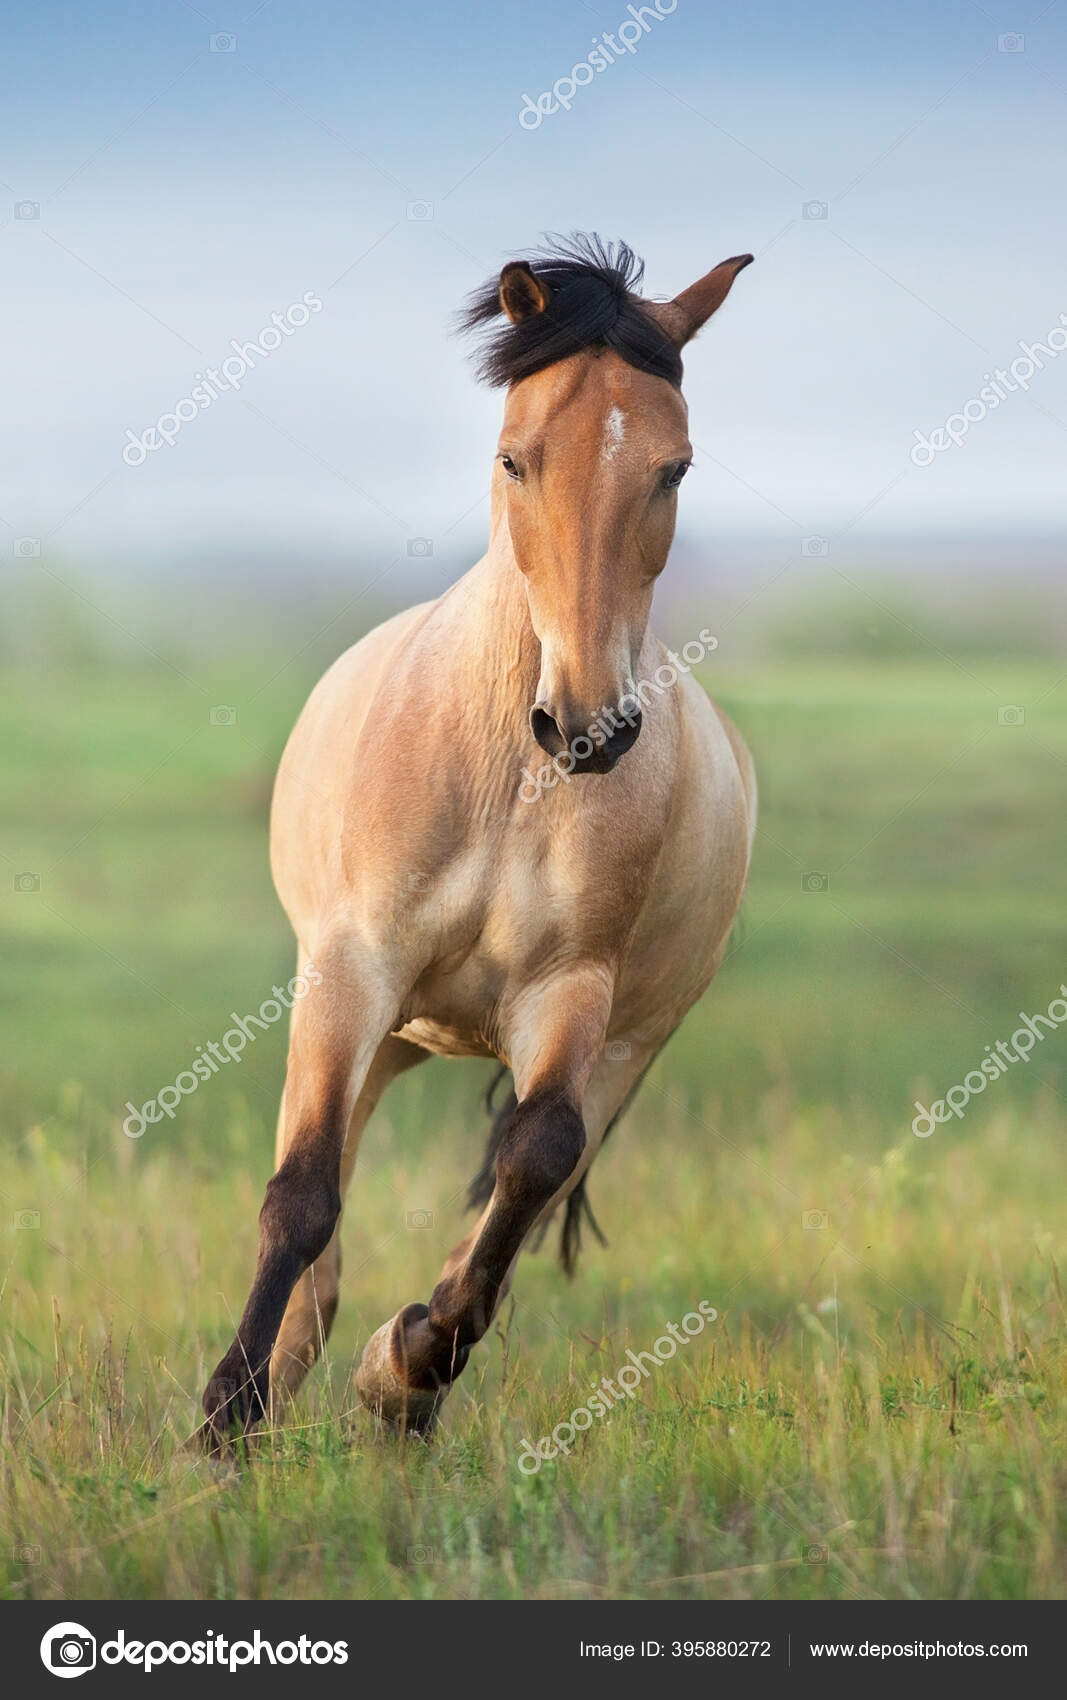 Buckskin Horse Run Gallop Spring Green Meadow Stock Photo Image By C Callipso Art 395880272